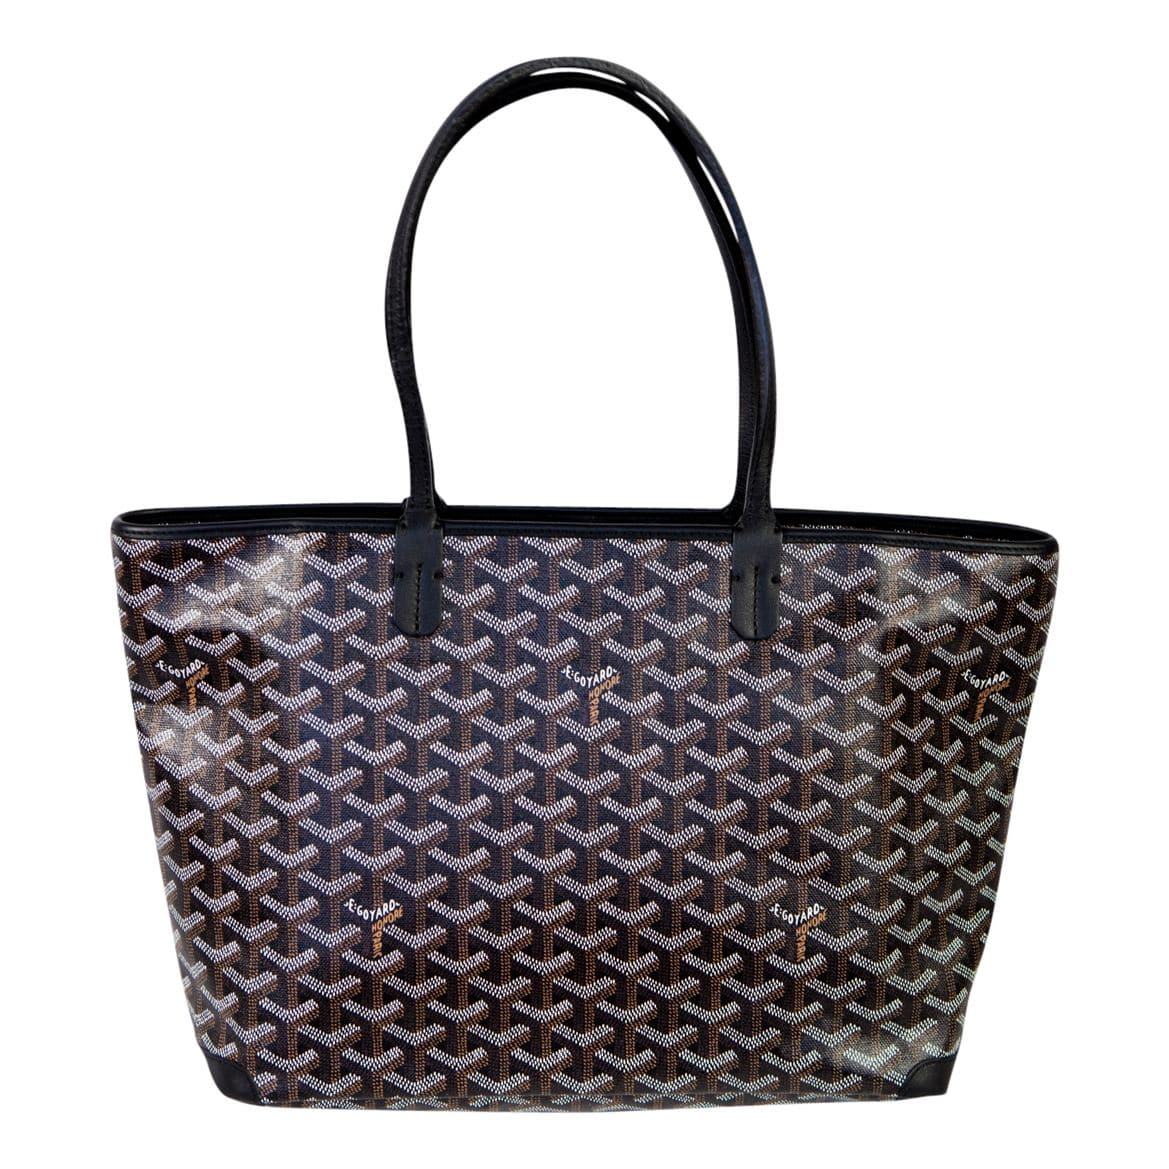 Goyard Bag Price Increase in Europe starting September 2015 – Spotted Fashion